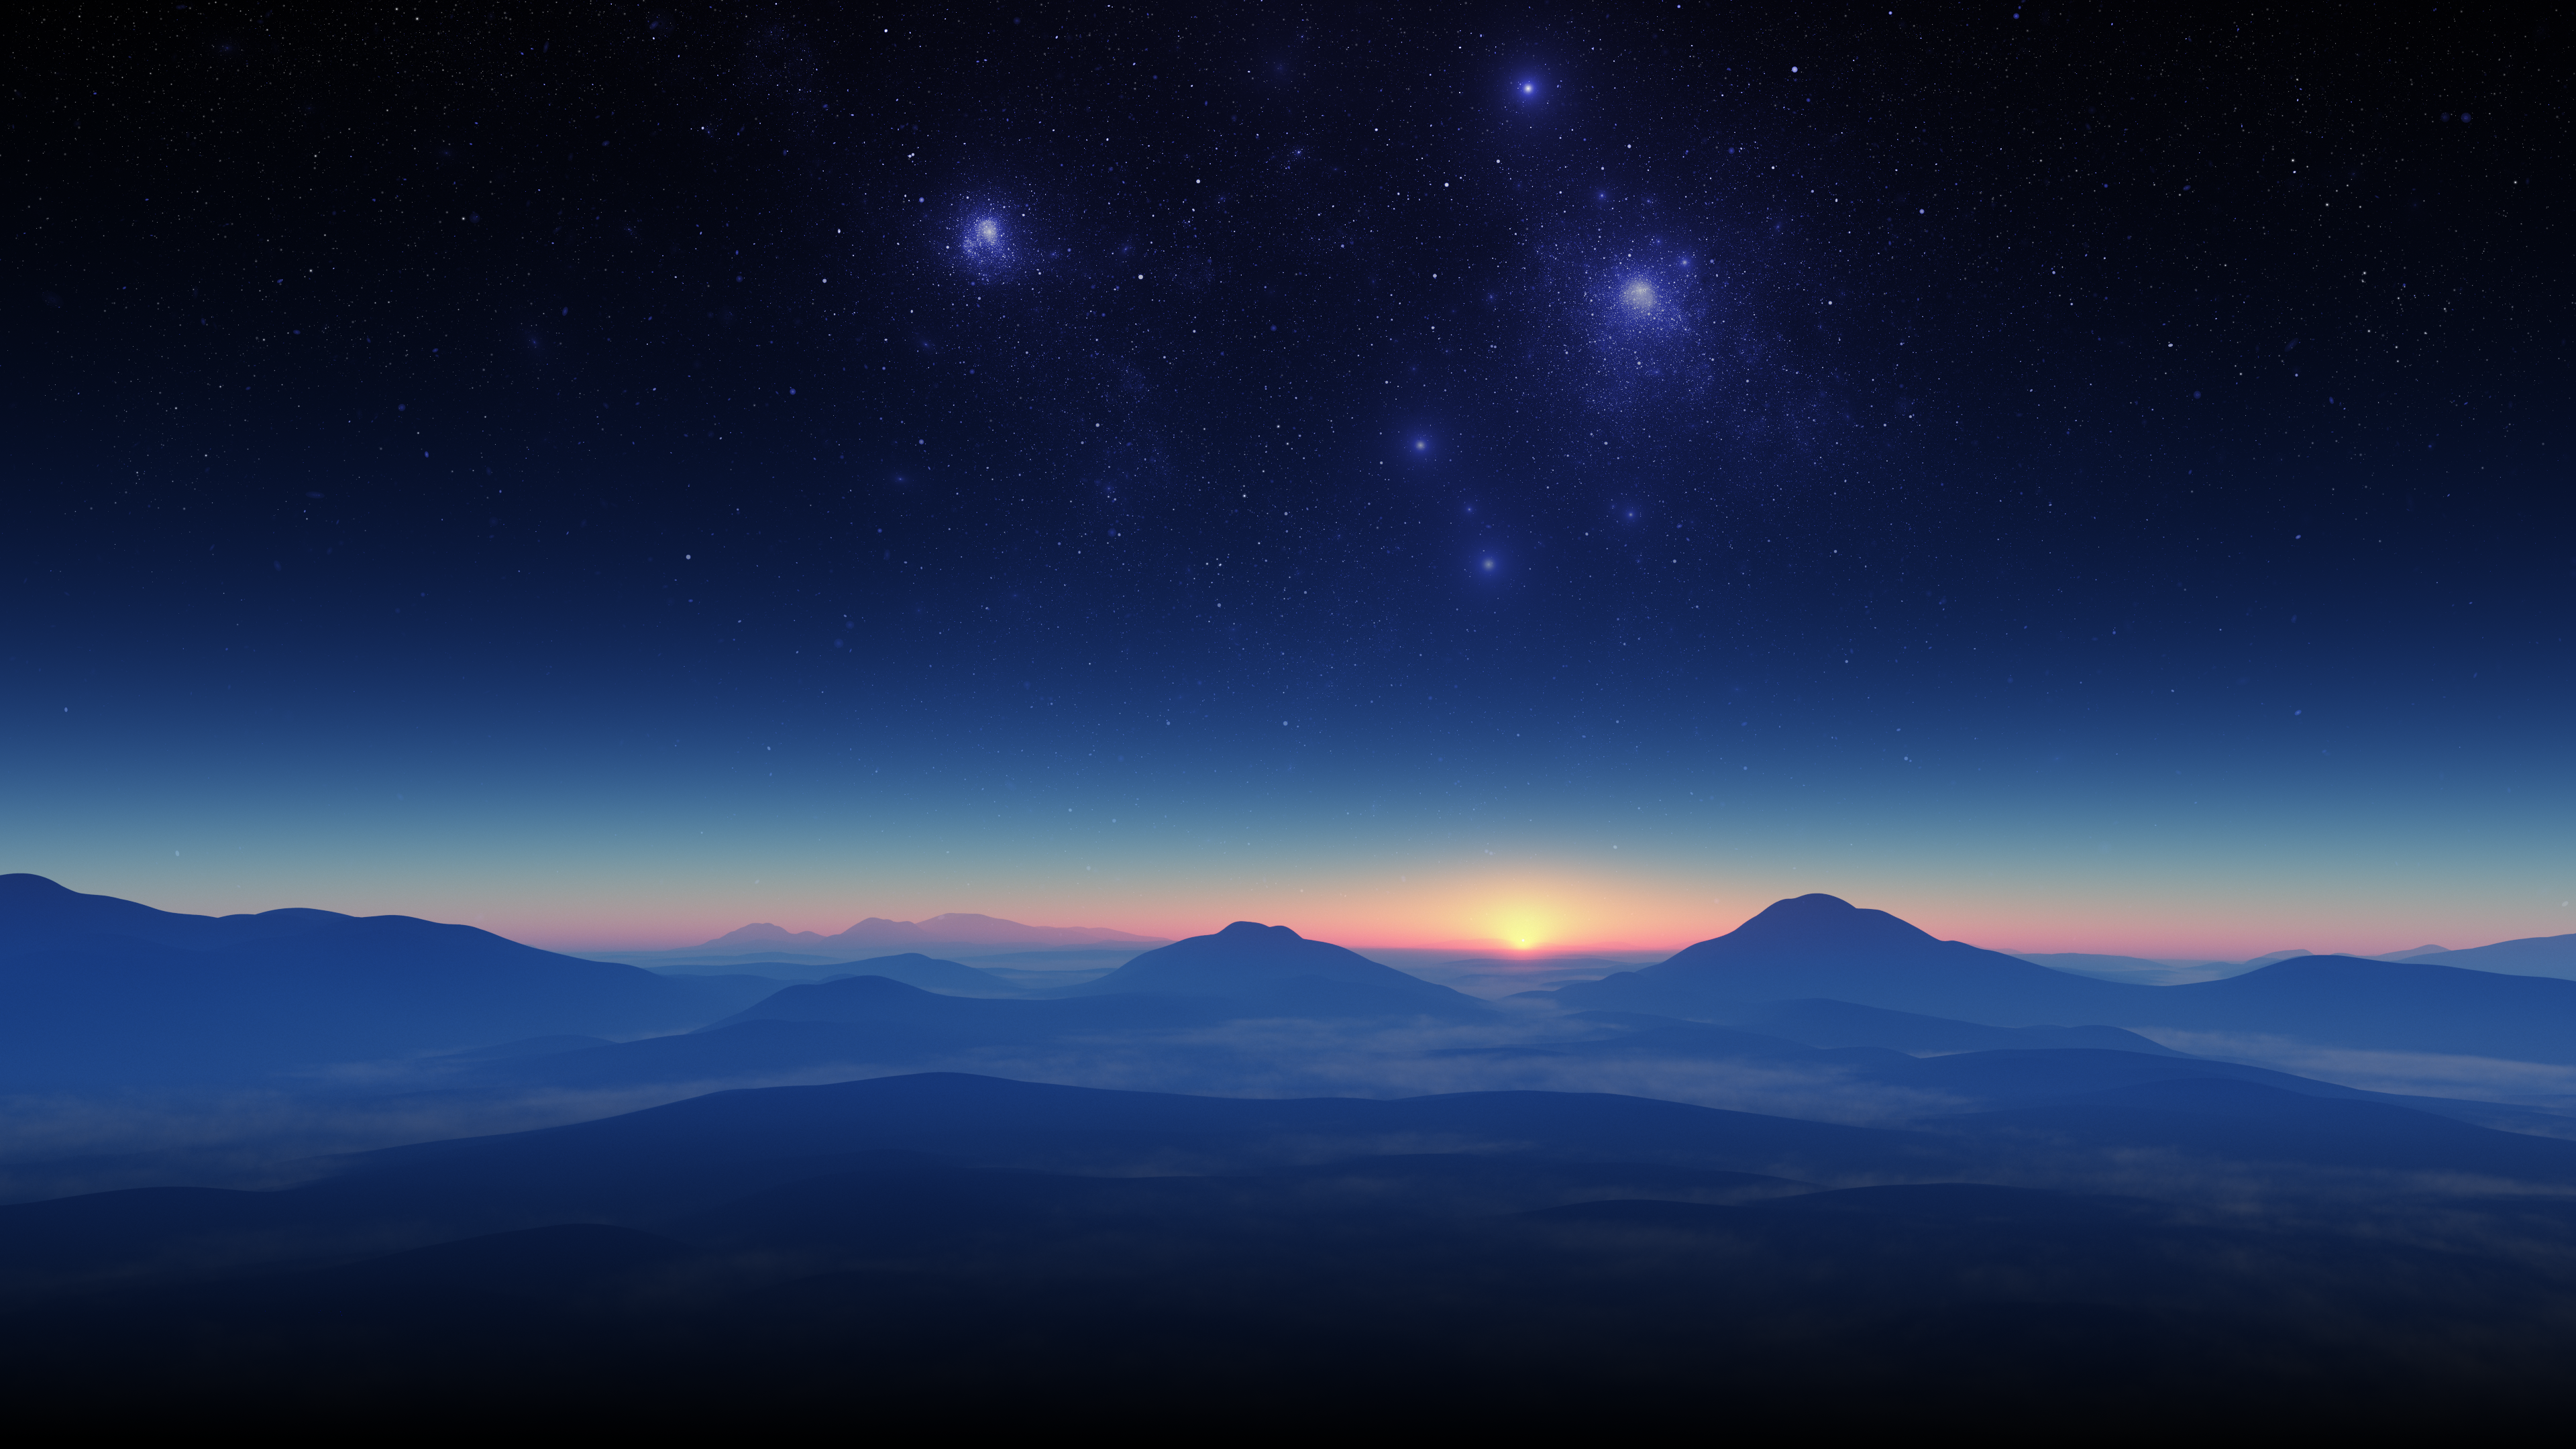 Hypnoshot Digital Digital Art Artwork Illustration Render Nature Landscape Mountains Night Stars 3840x2160